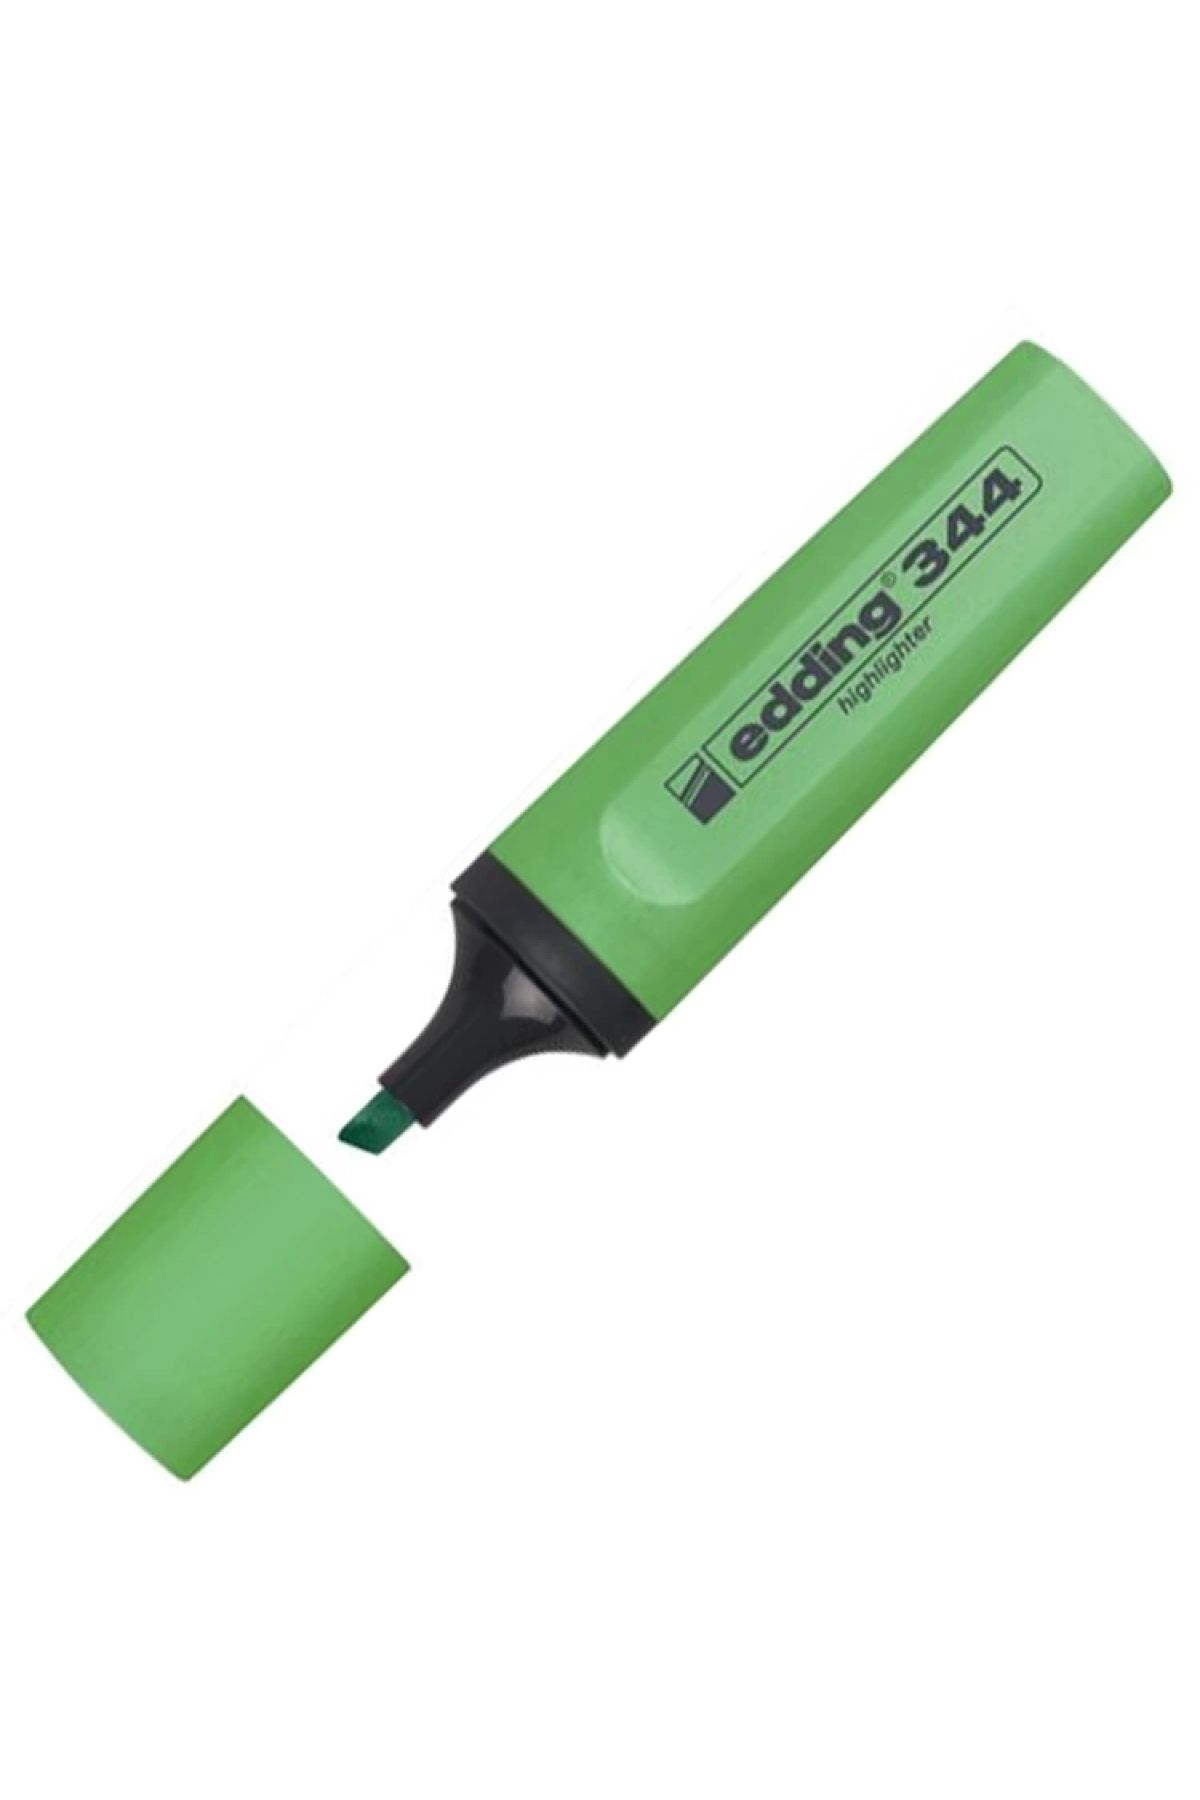 Edding Eddıng Fosforlu Kalem 344 Yeşil